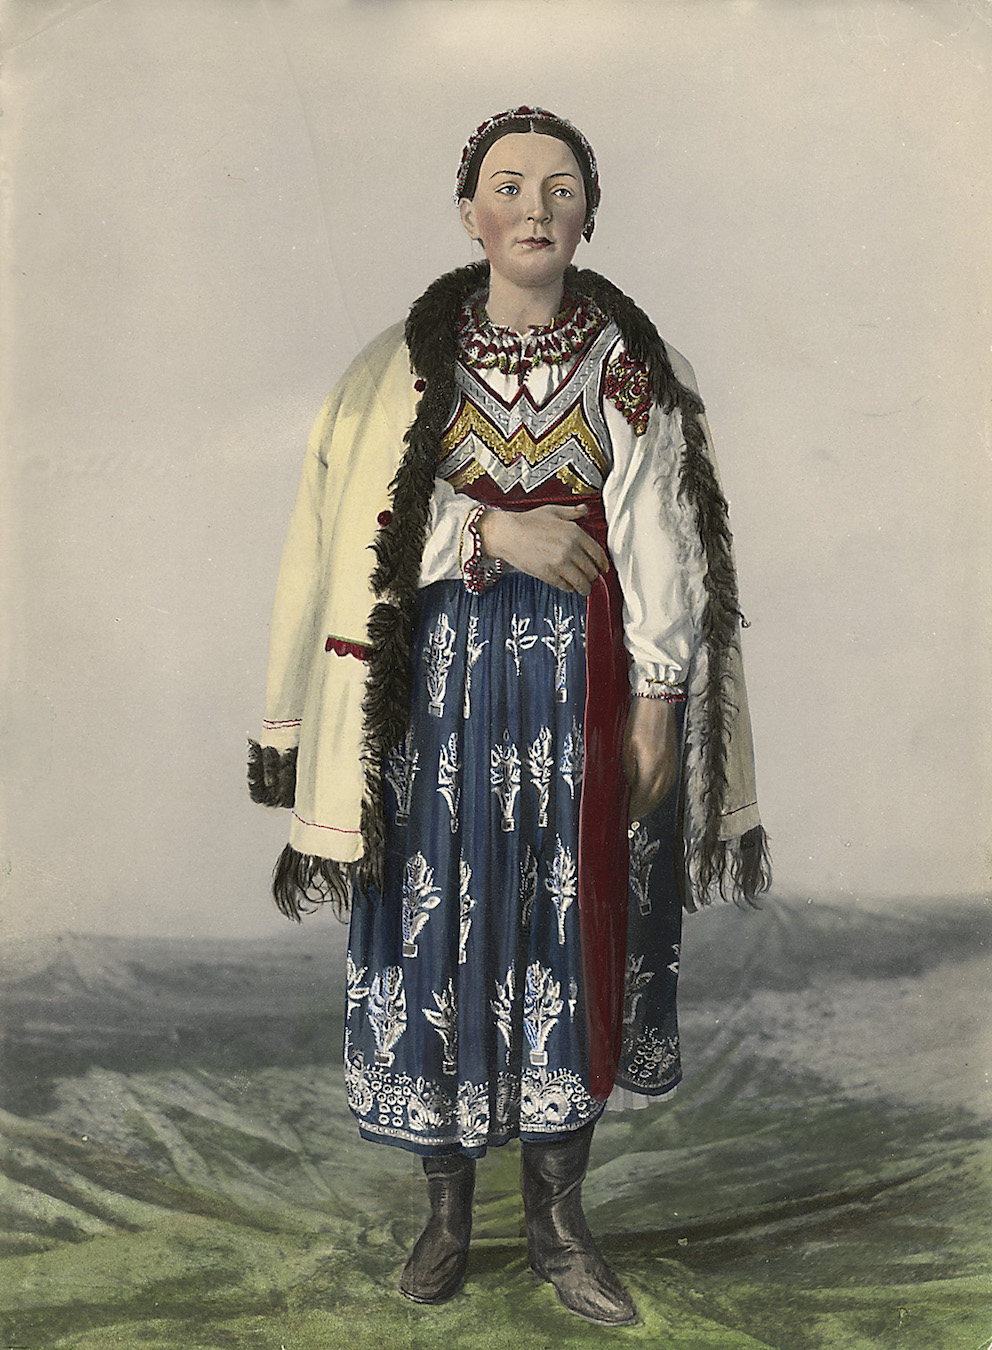 Slovak Girl from the Kriván Region